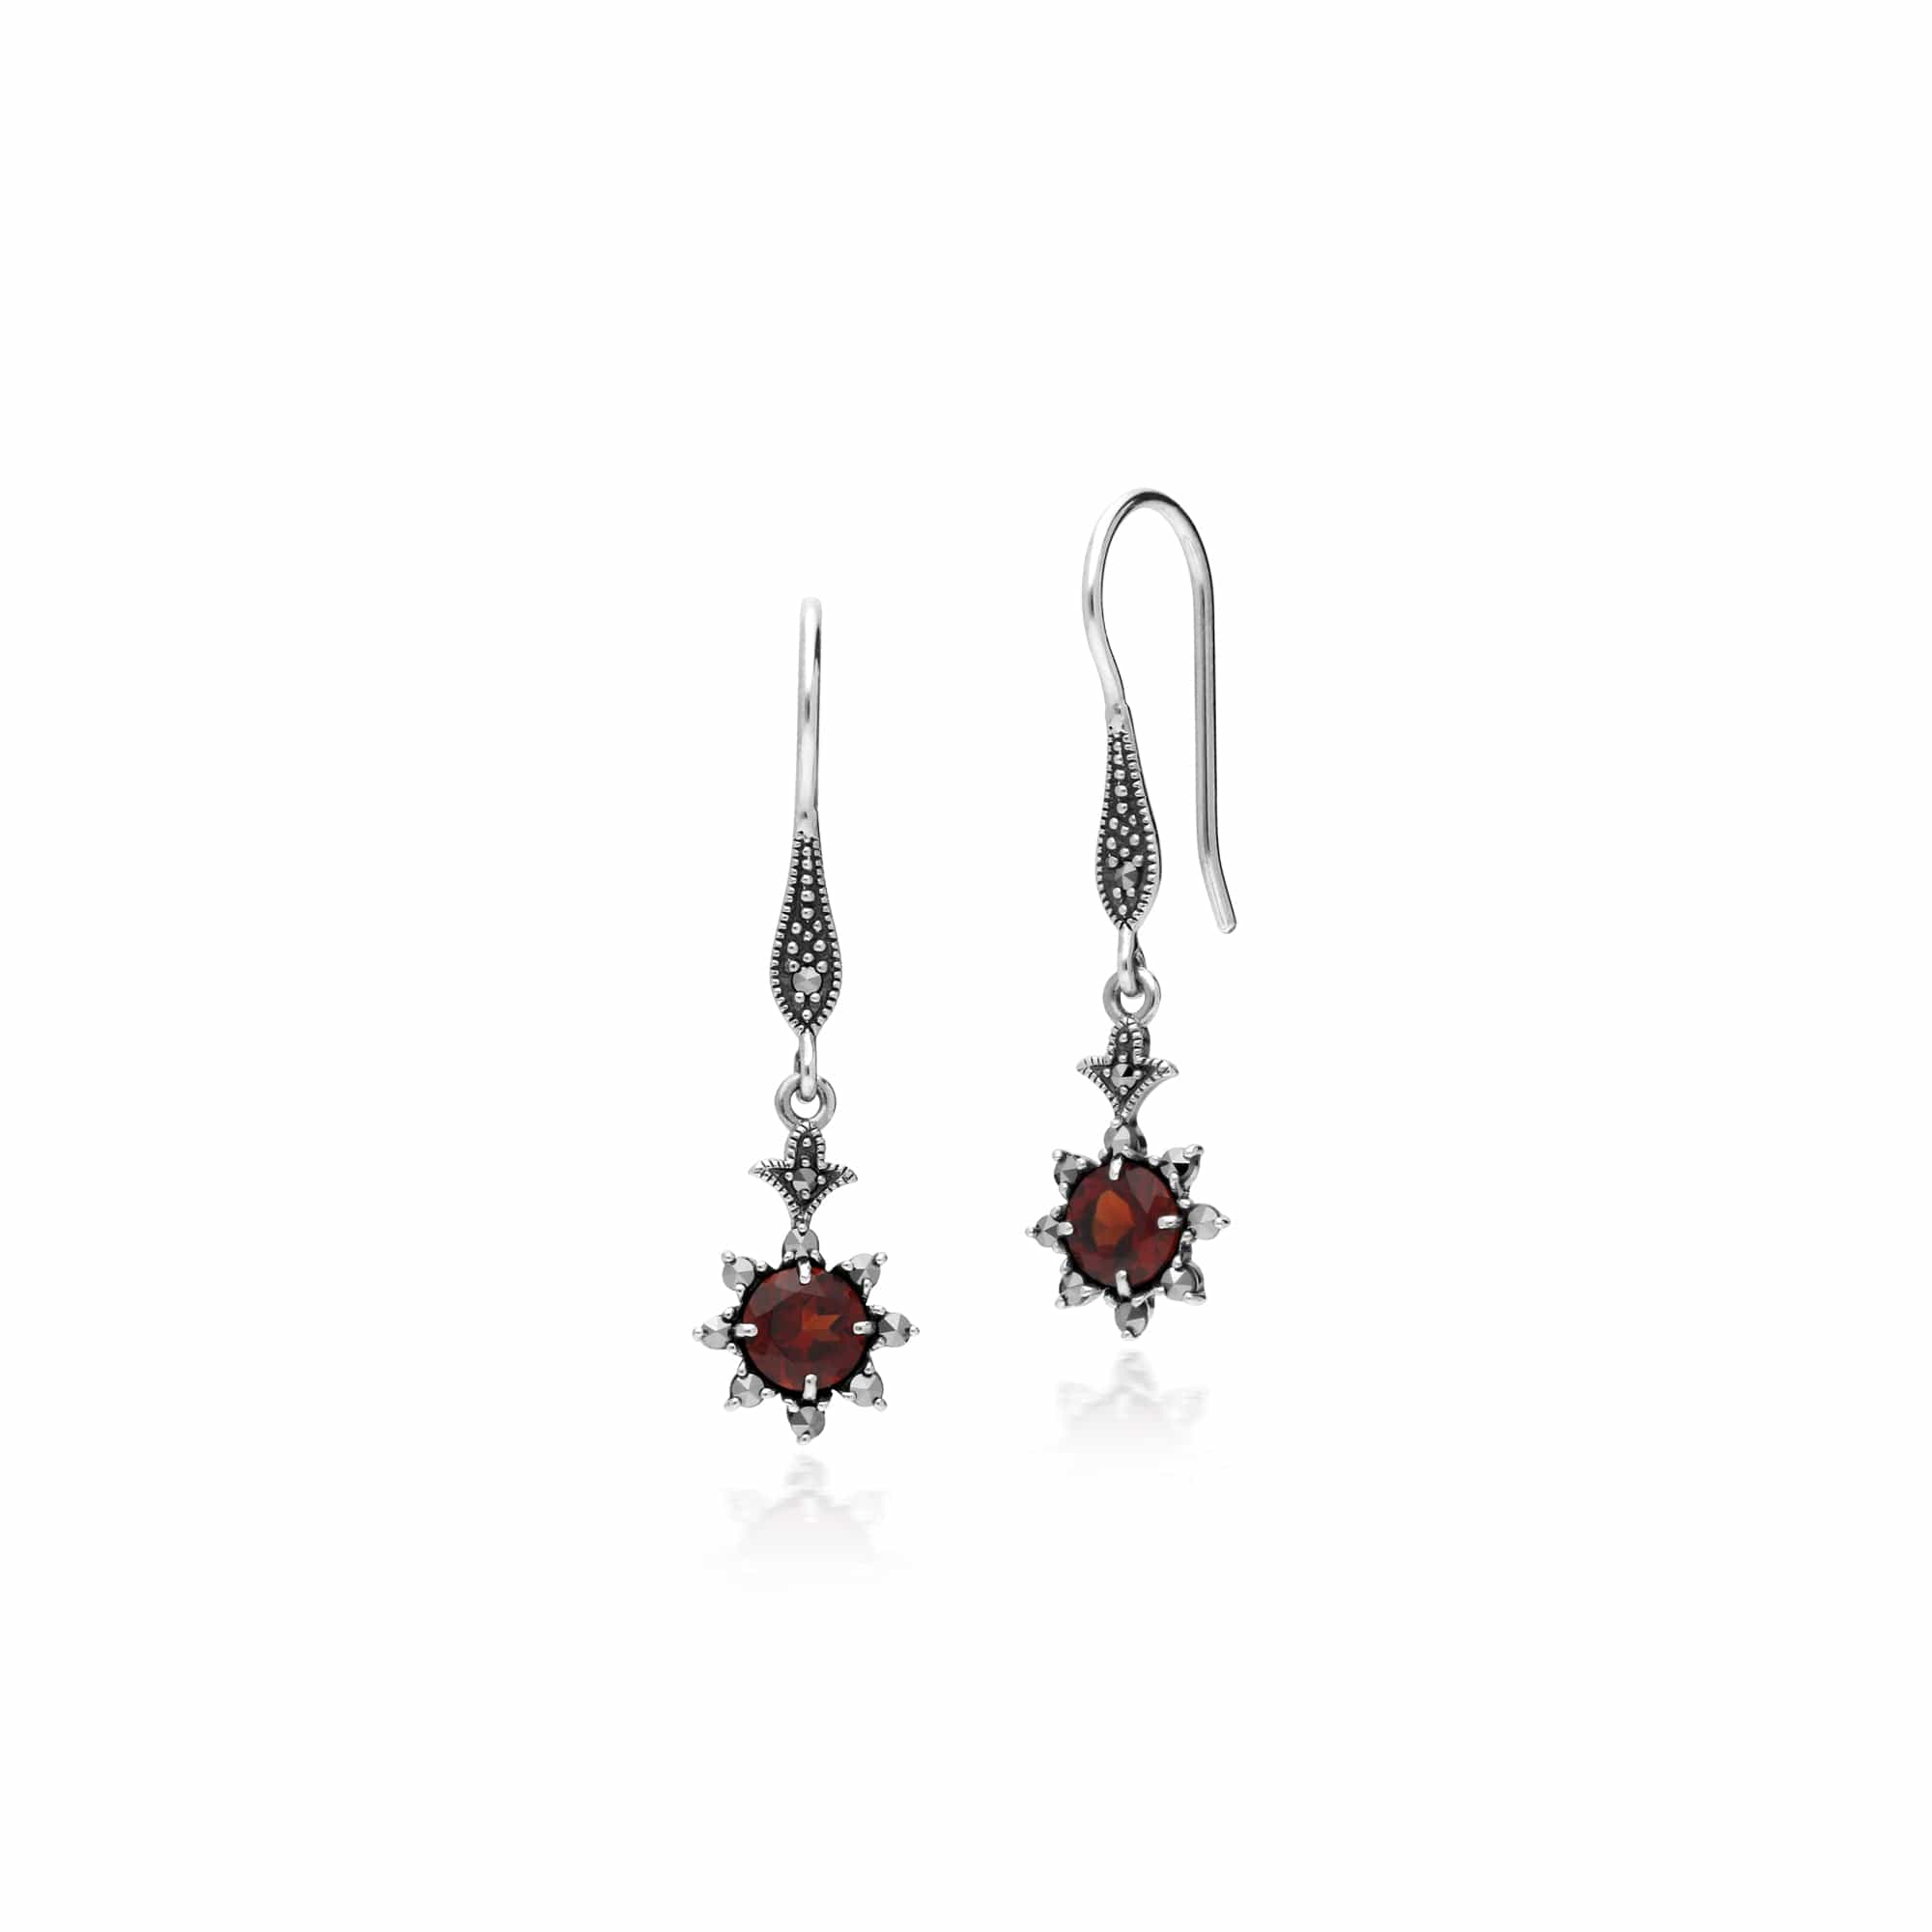 Floral Round Garnet & Marcasite Drop Earrings in 925 Sterling Silver - Gemondo